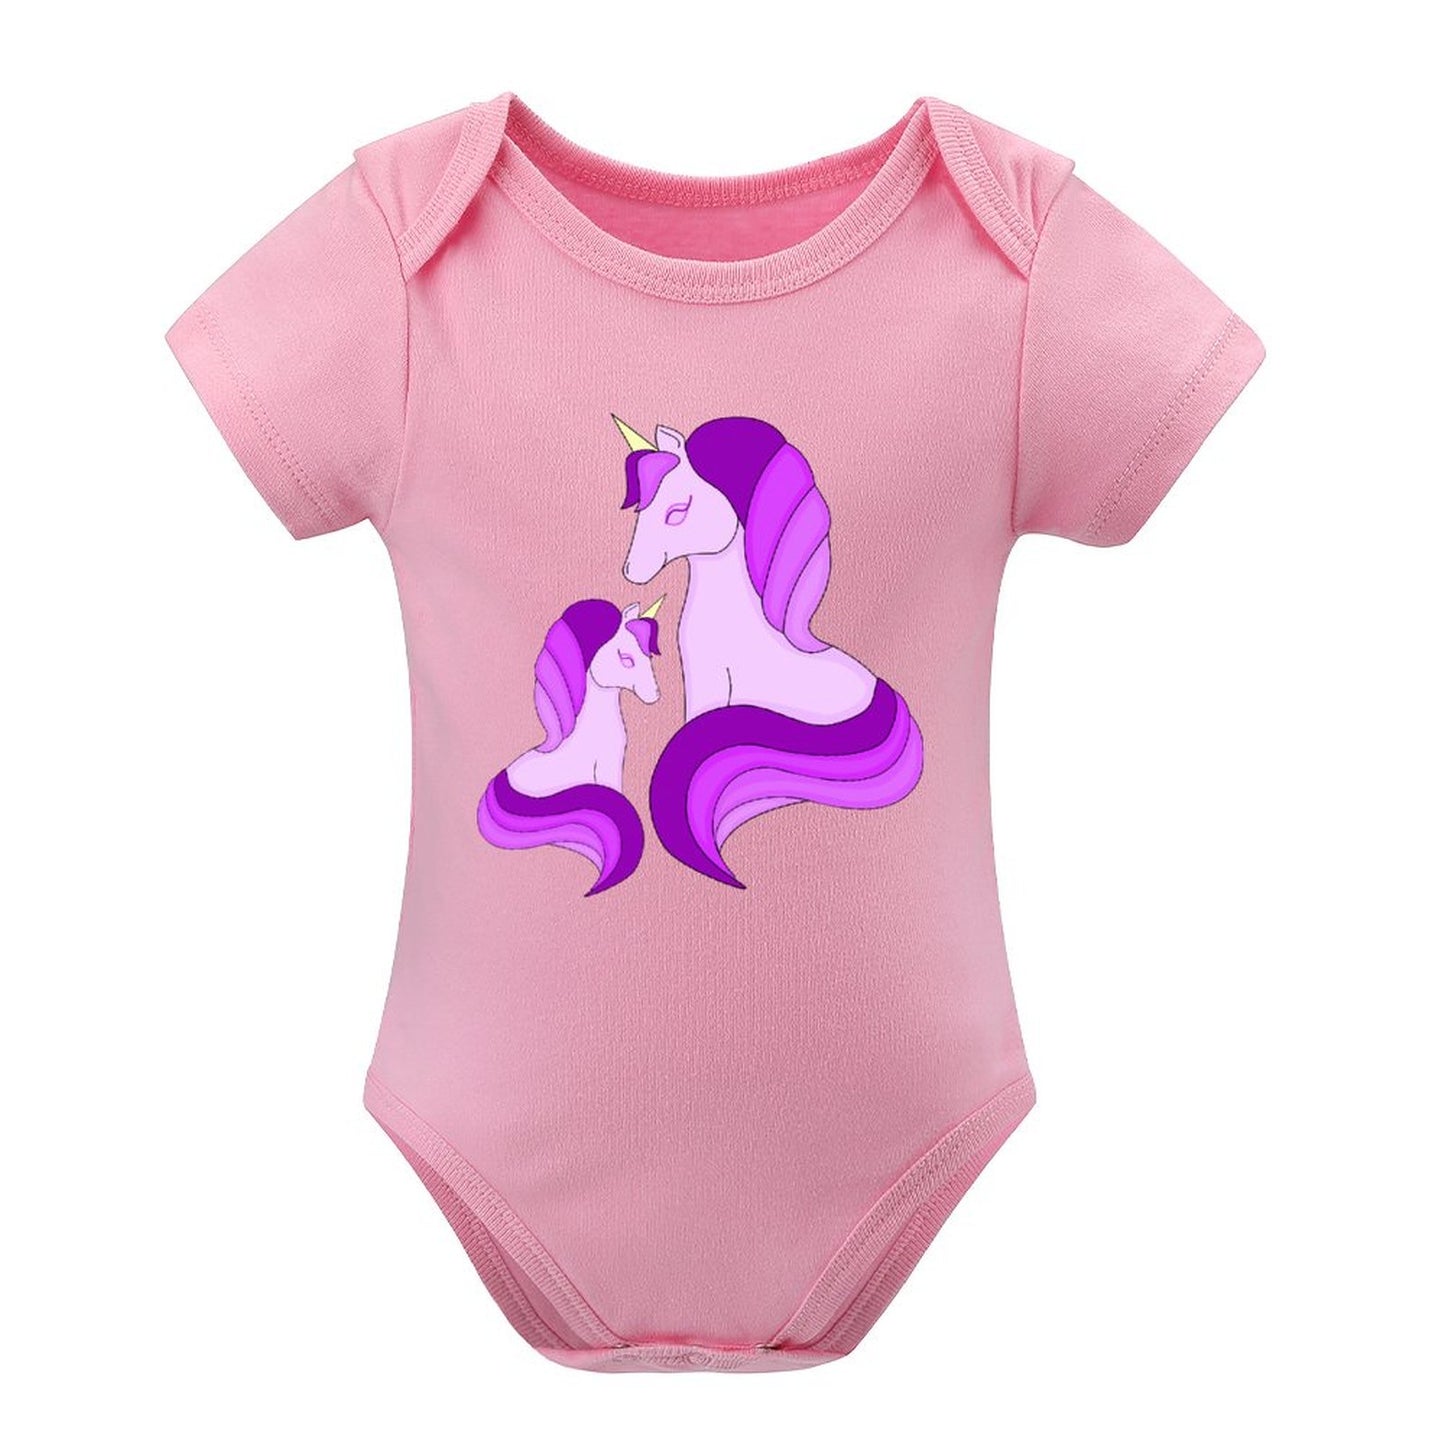 Online DIY Rompers for Children Short Sleeved Baby Jacket Pink Unicorn Mom